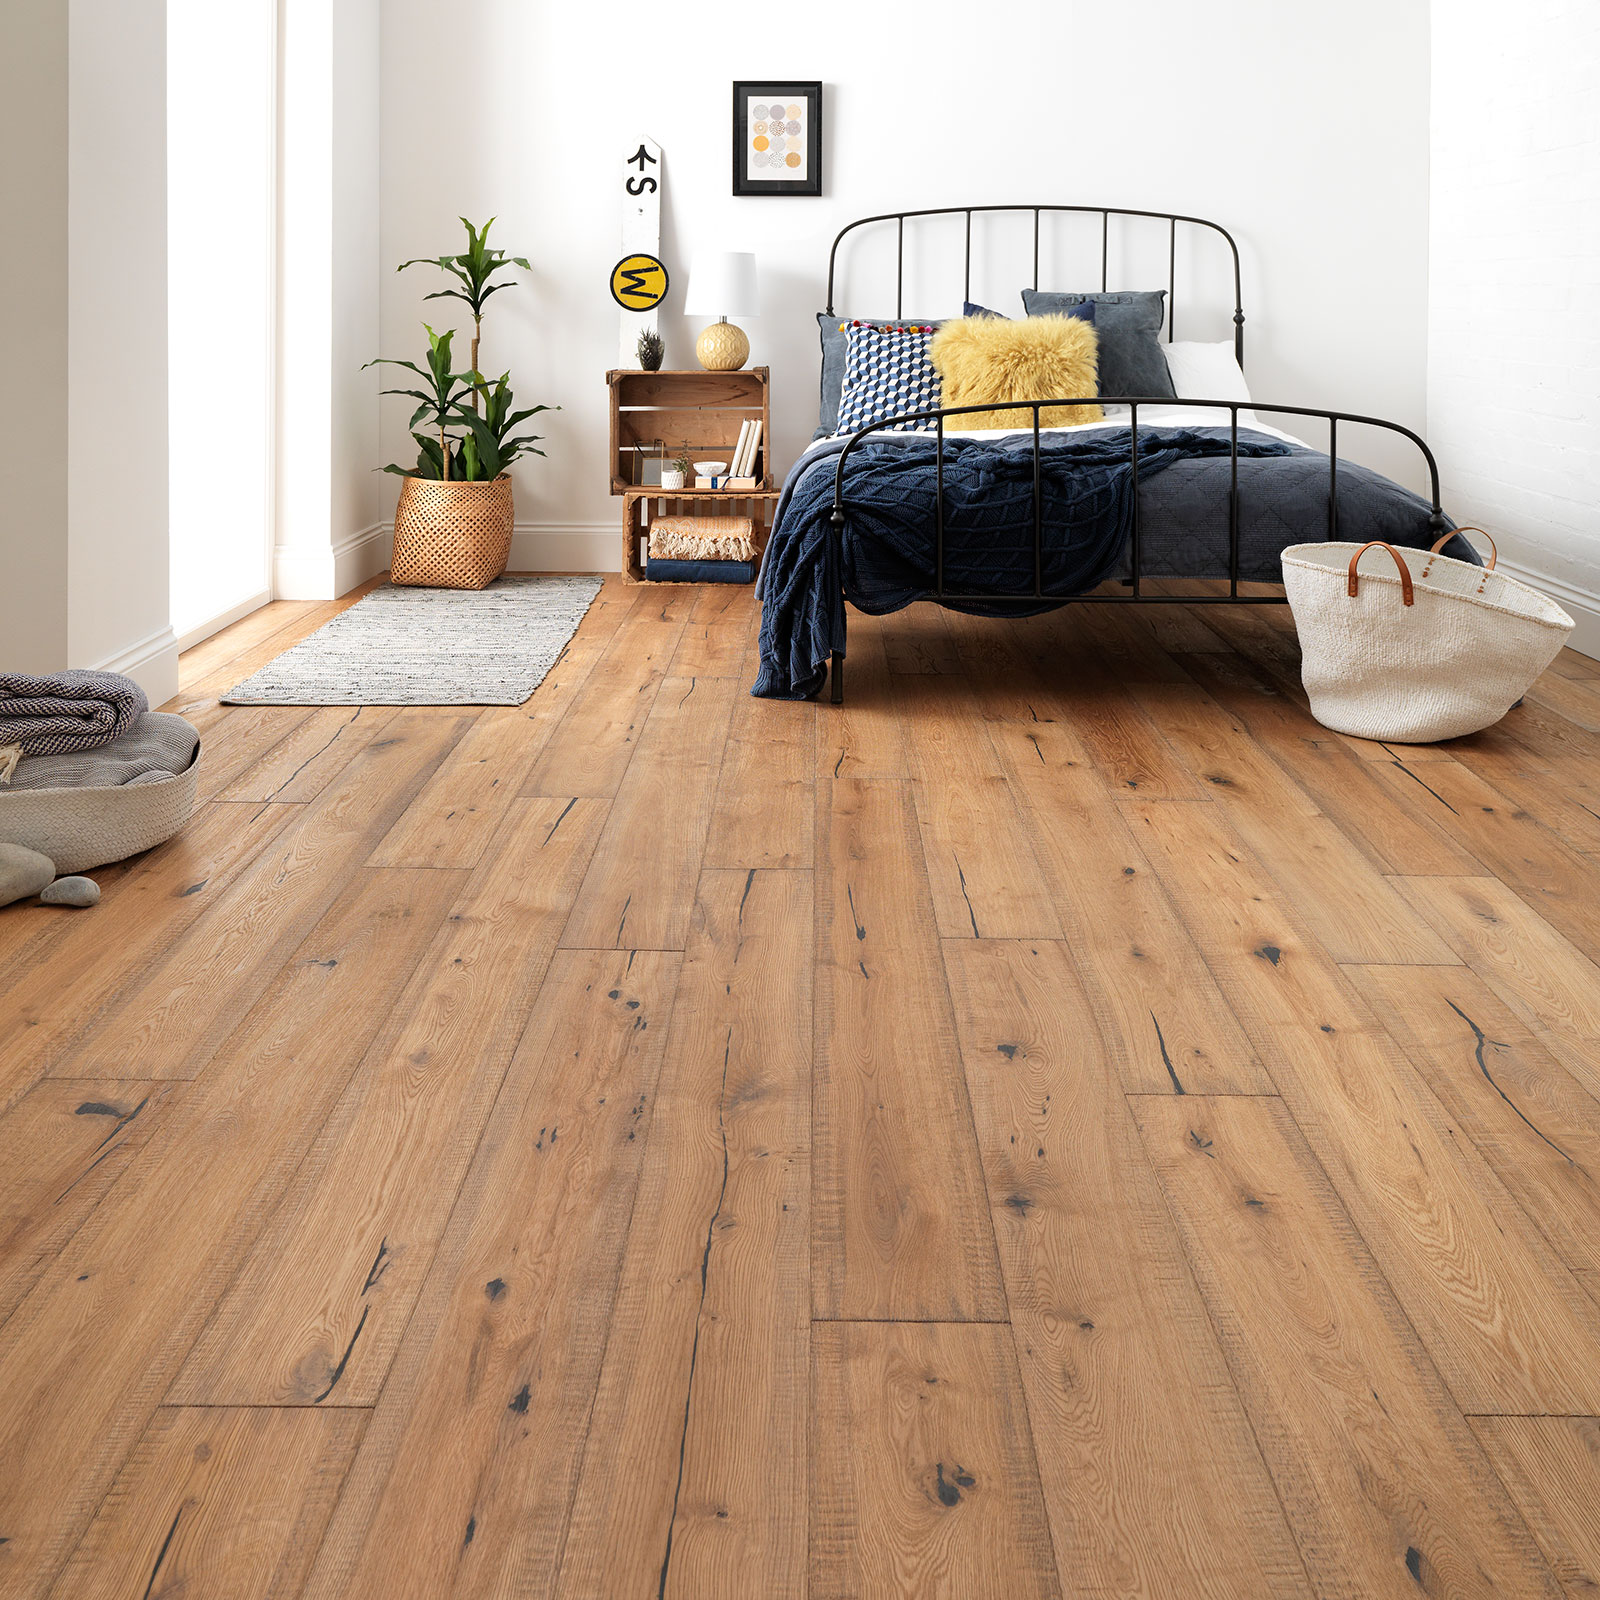 warm wood floors berkeley cottage oak